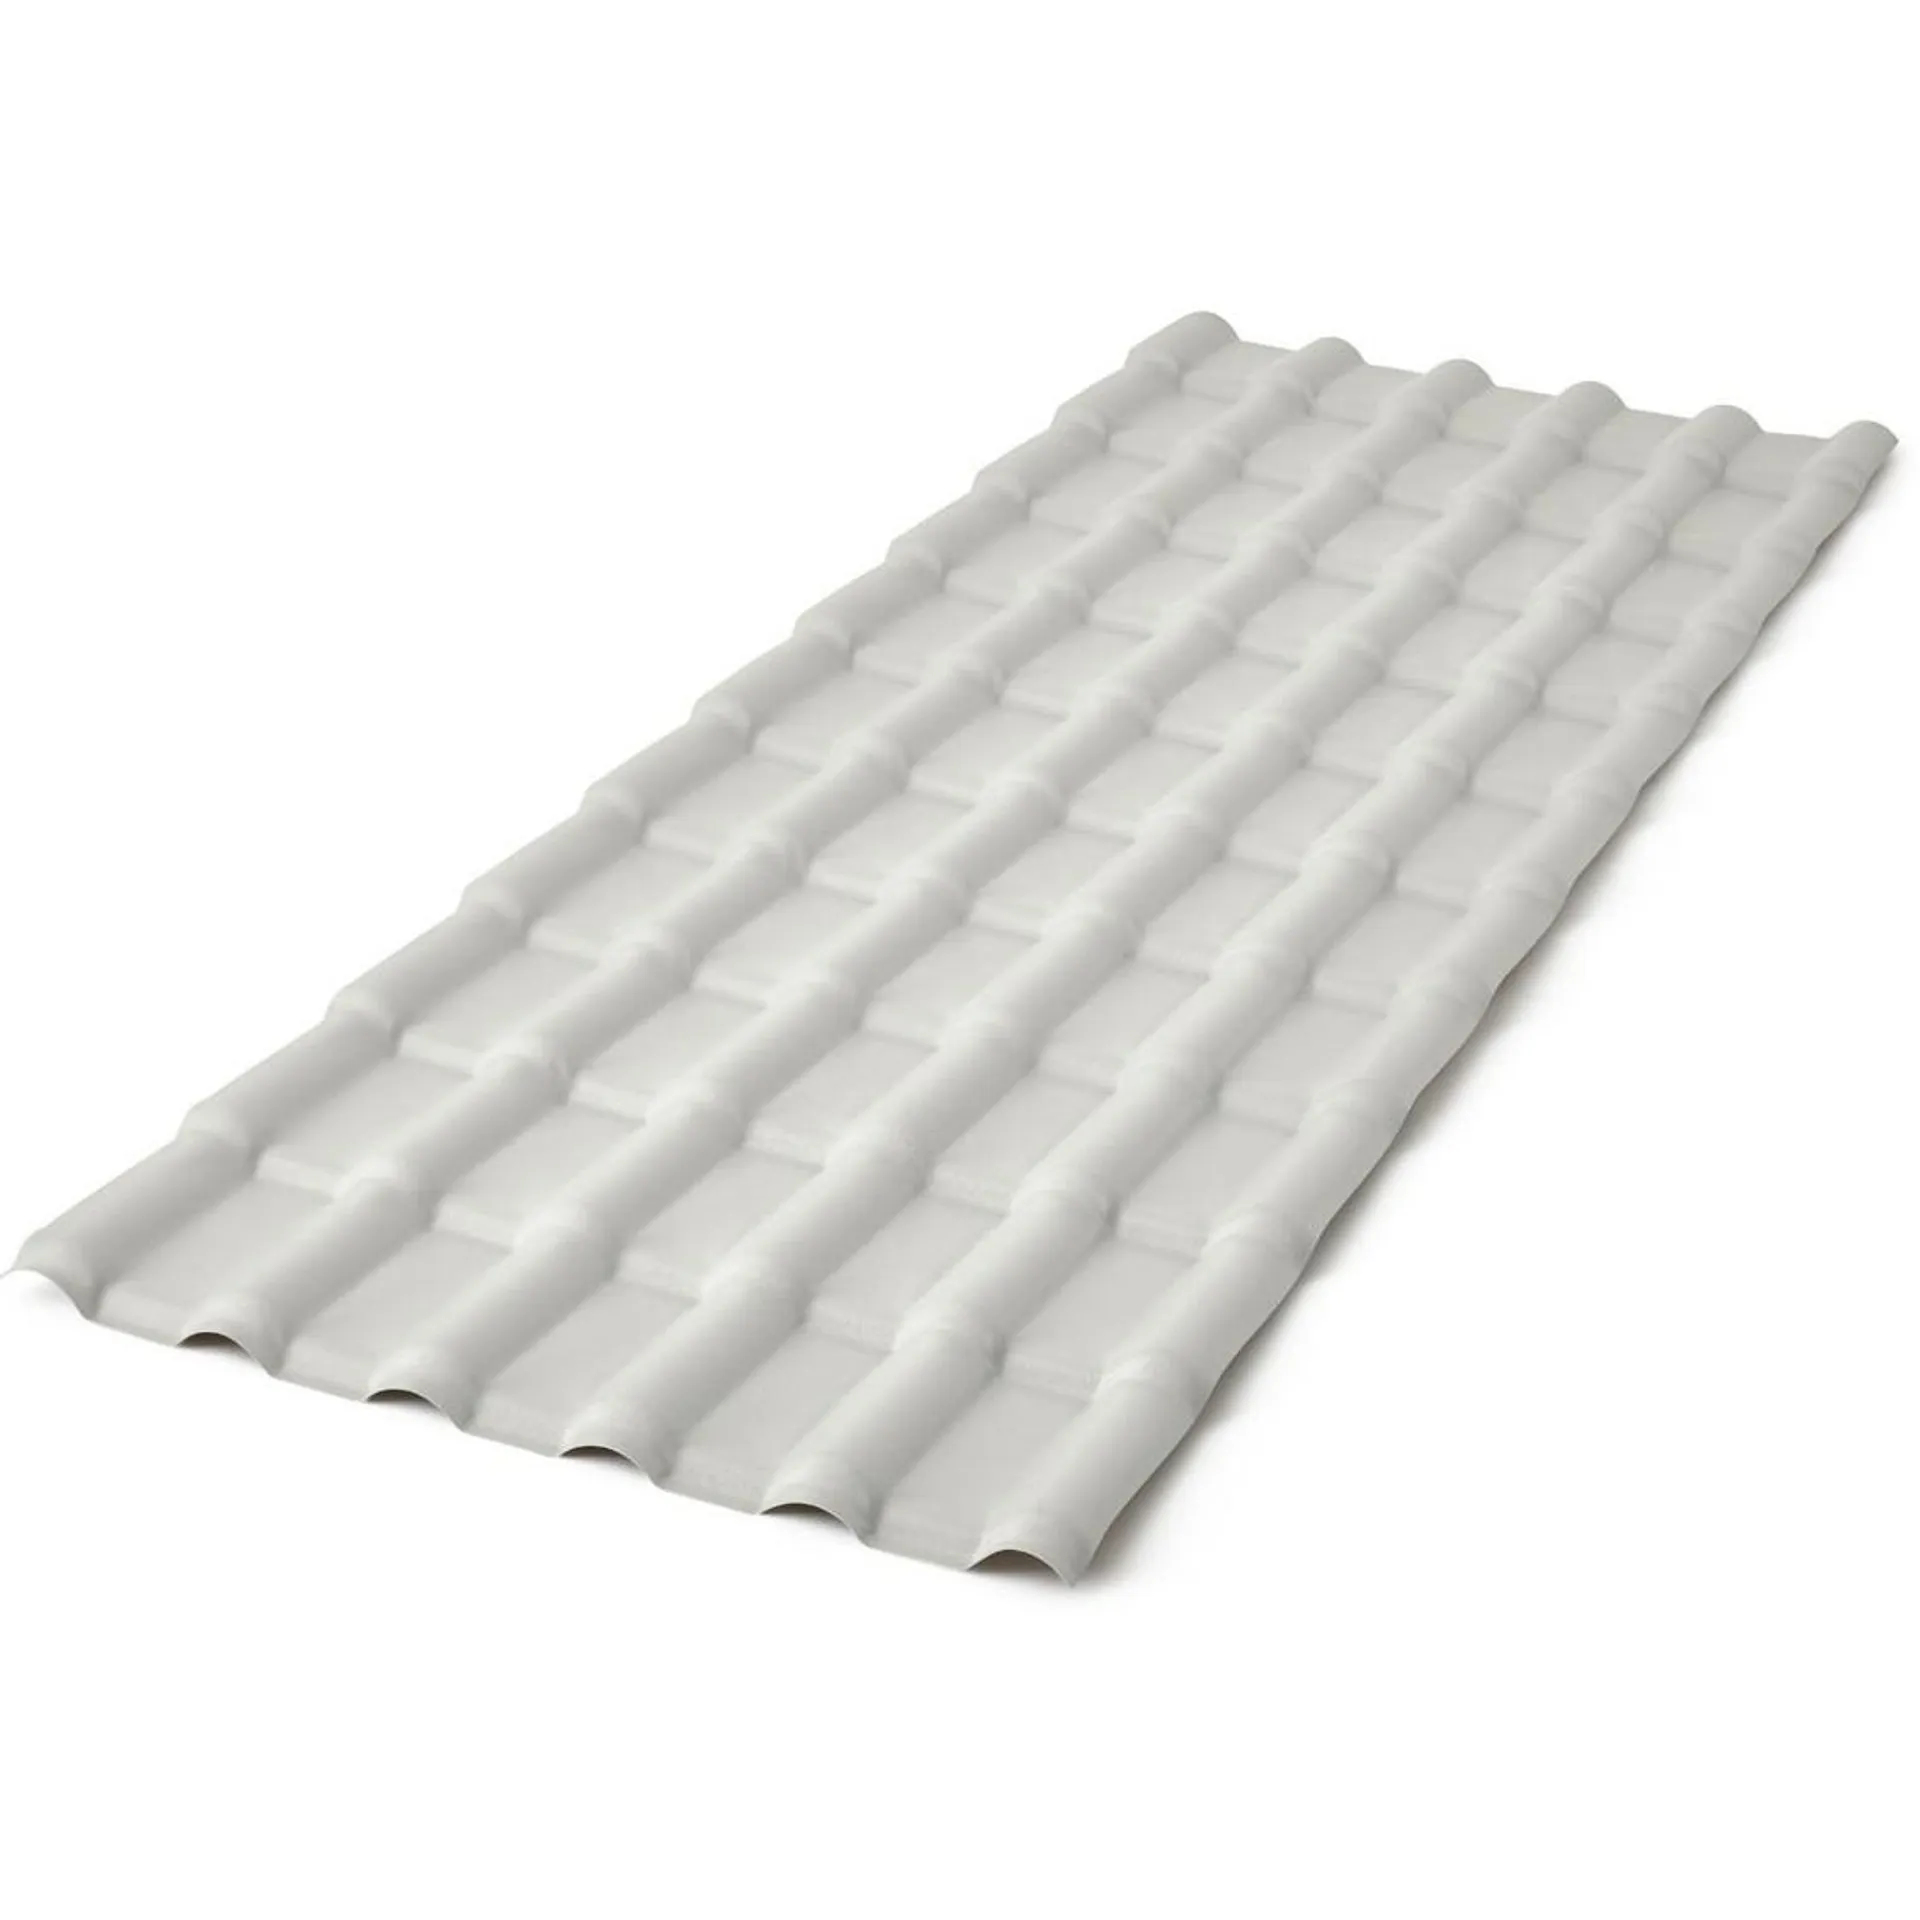 Telha de PVC Plan Concreto Ondulada 198x88 cm 1,6 mm - Precon